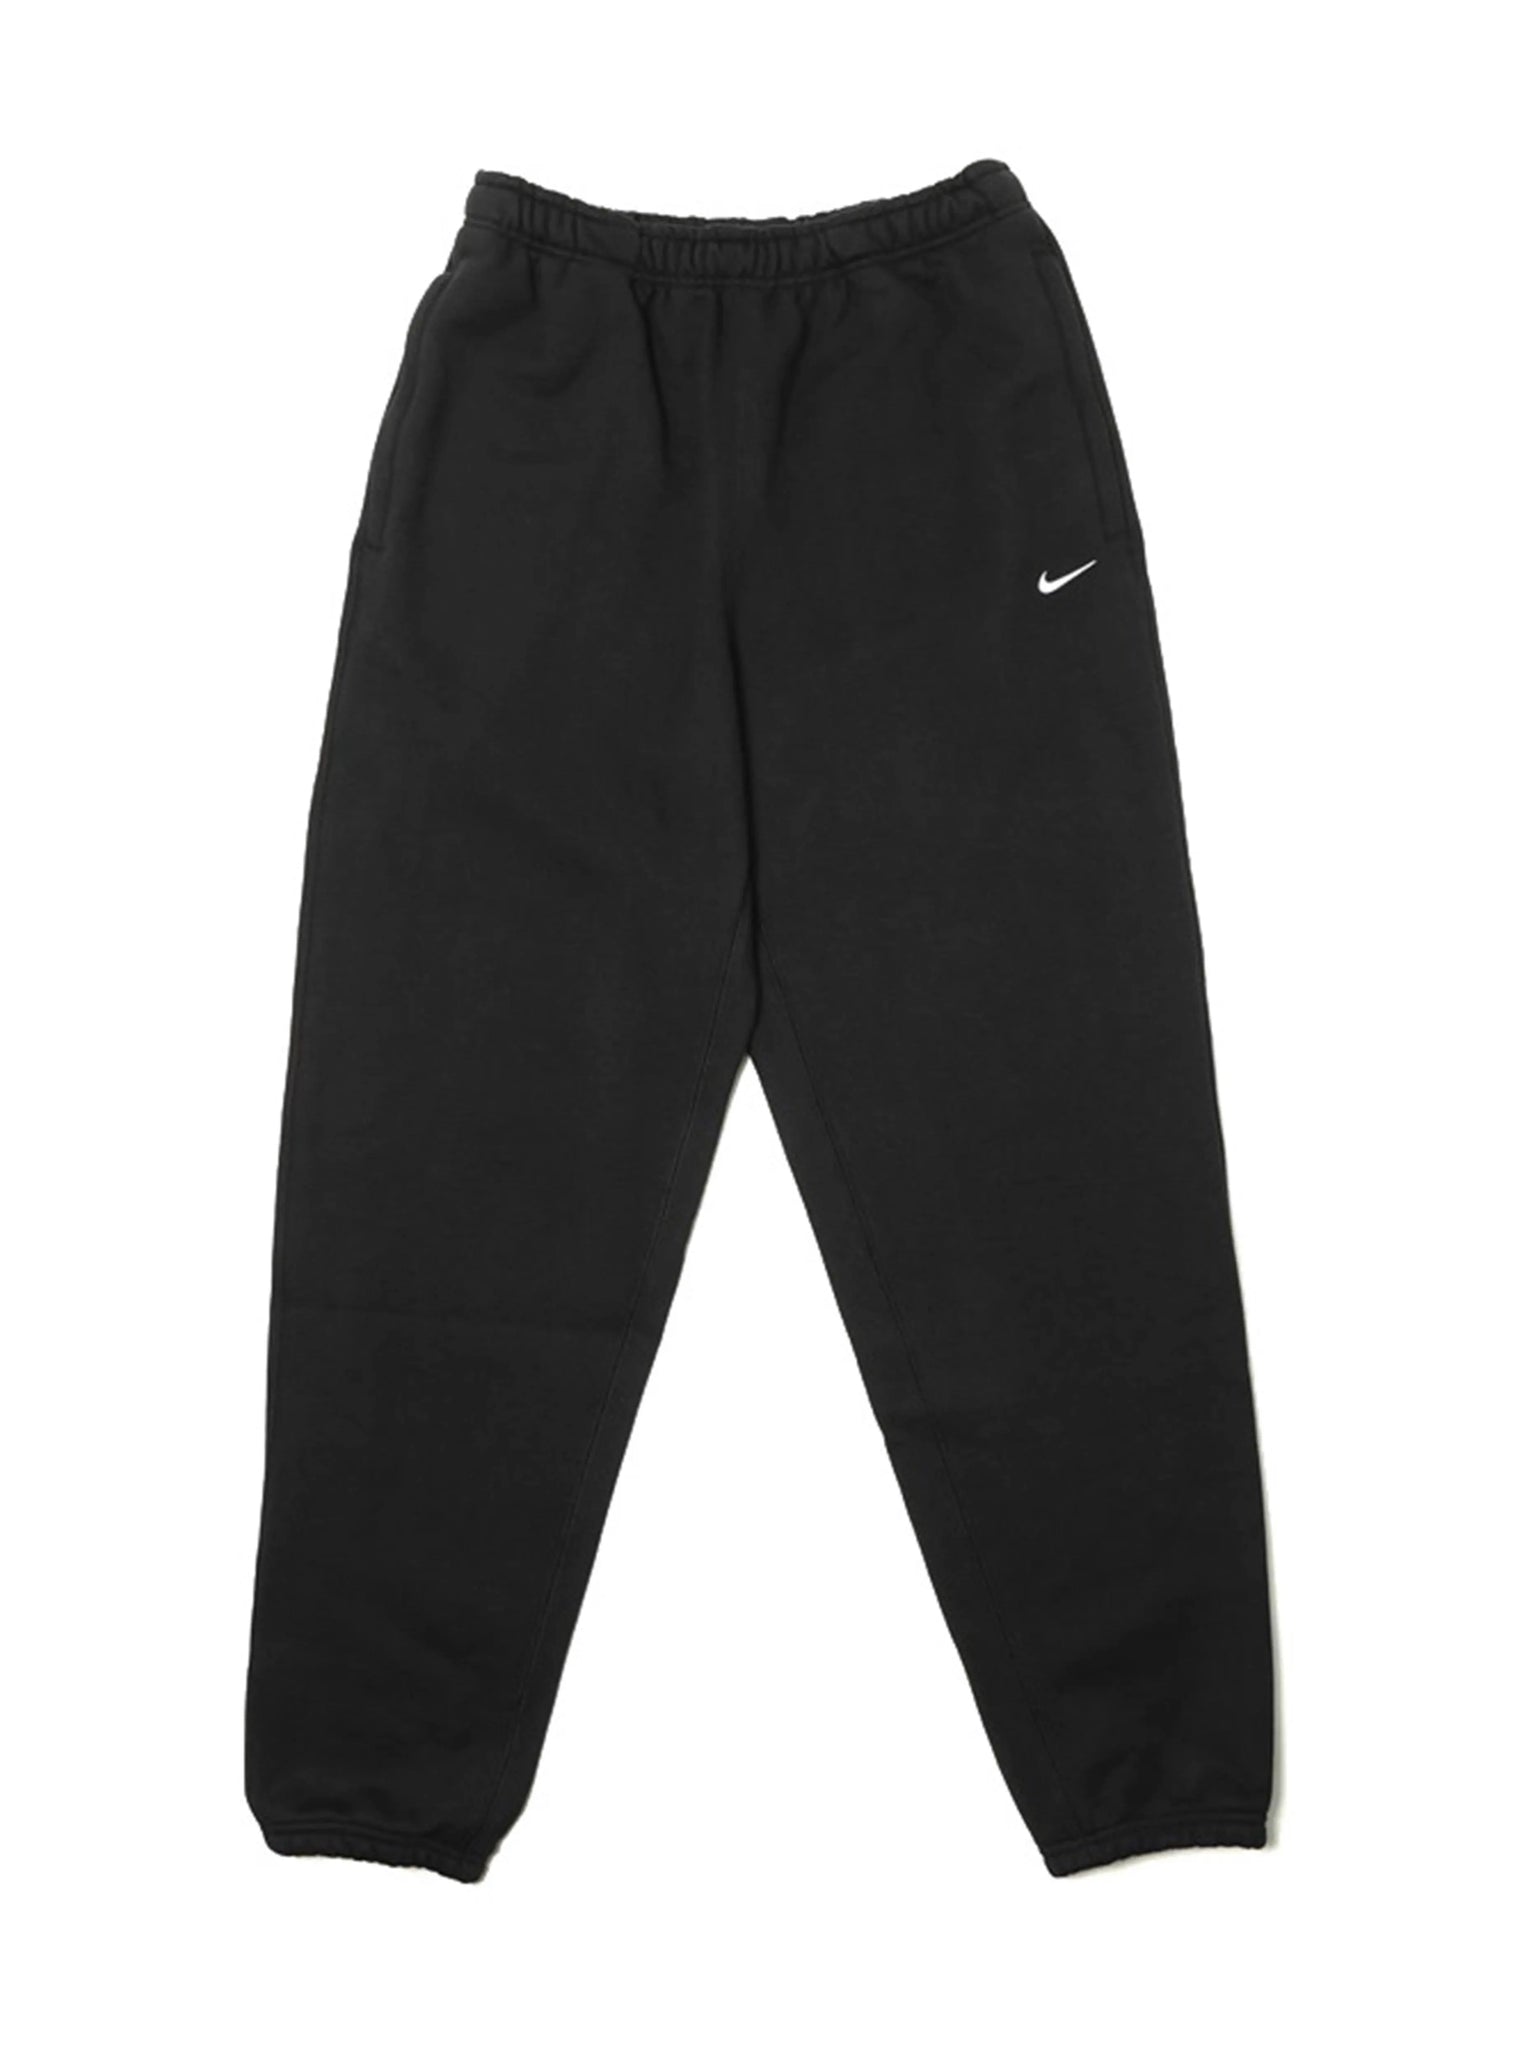 NikeLab NRG Track Pants Black Prior